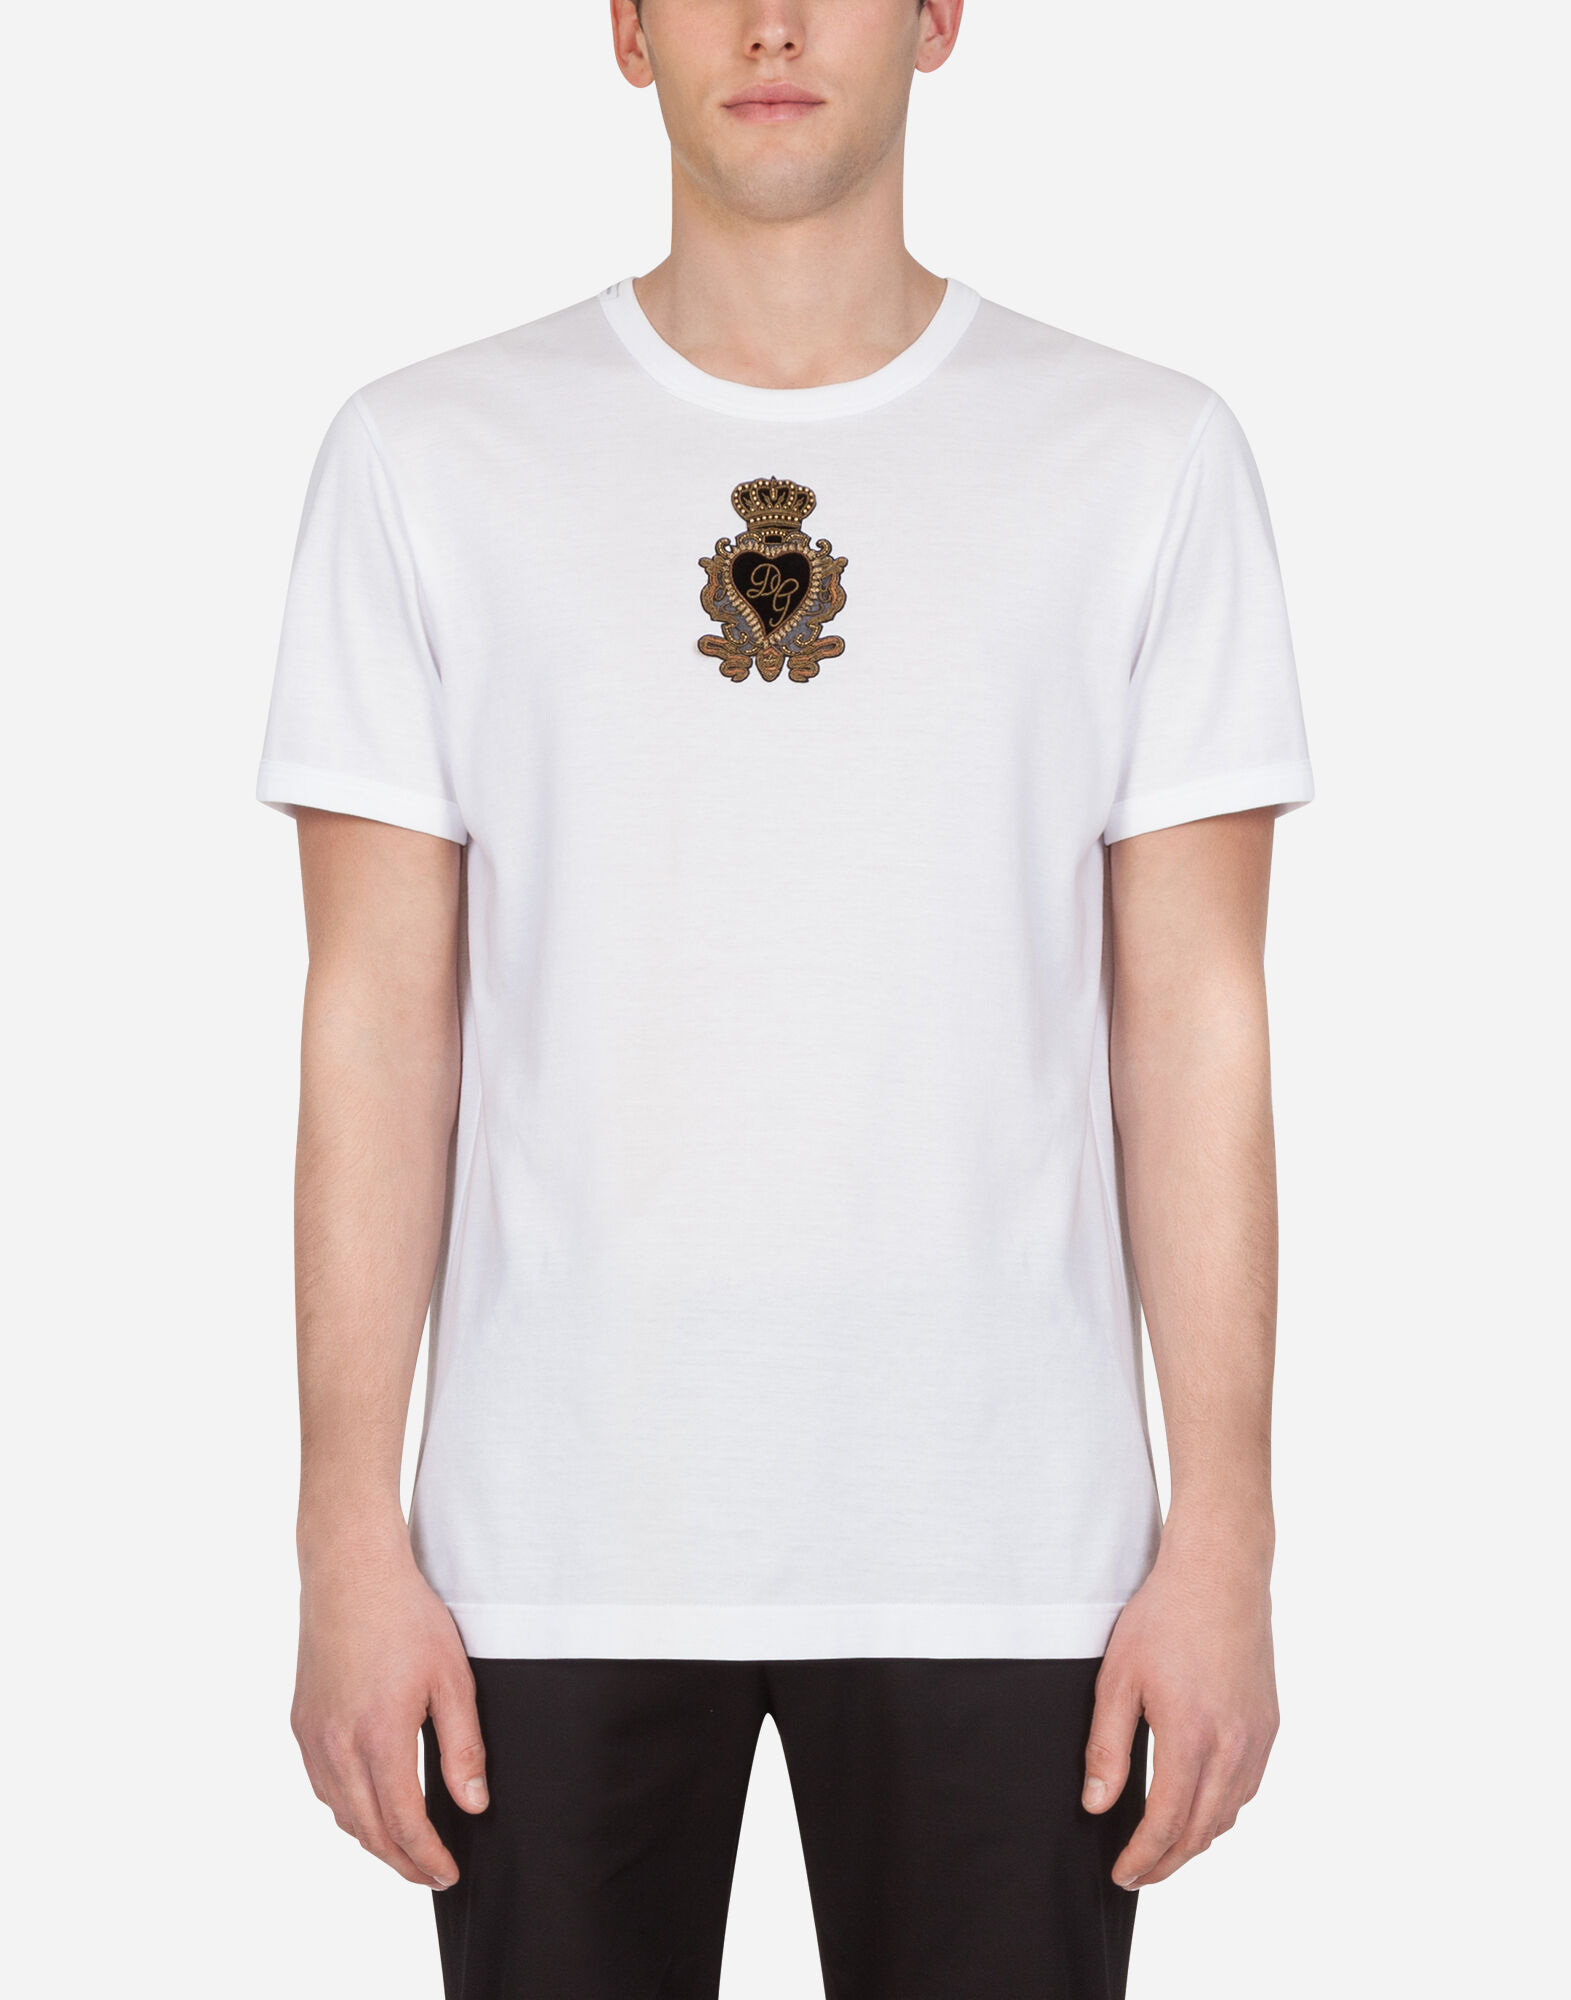 Heraldic patch T-shirt